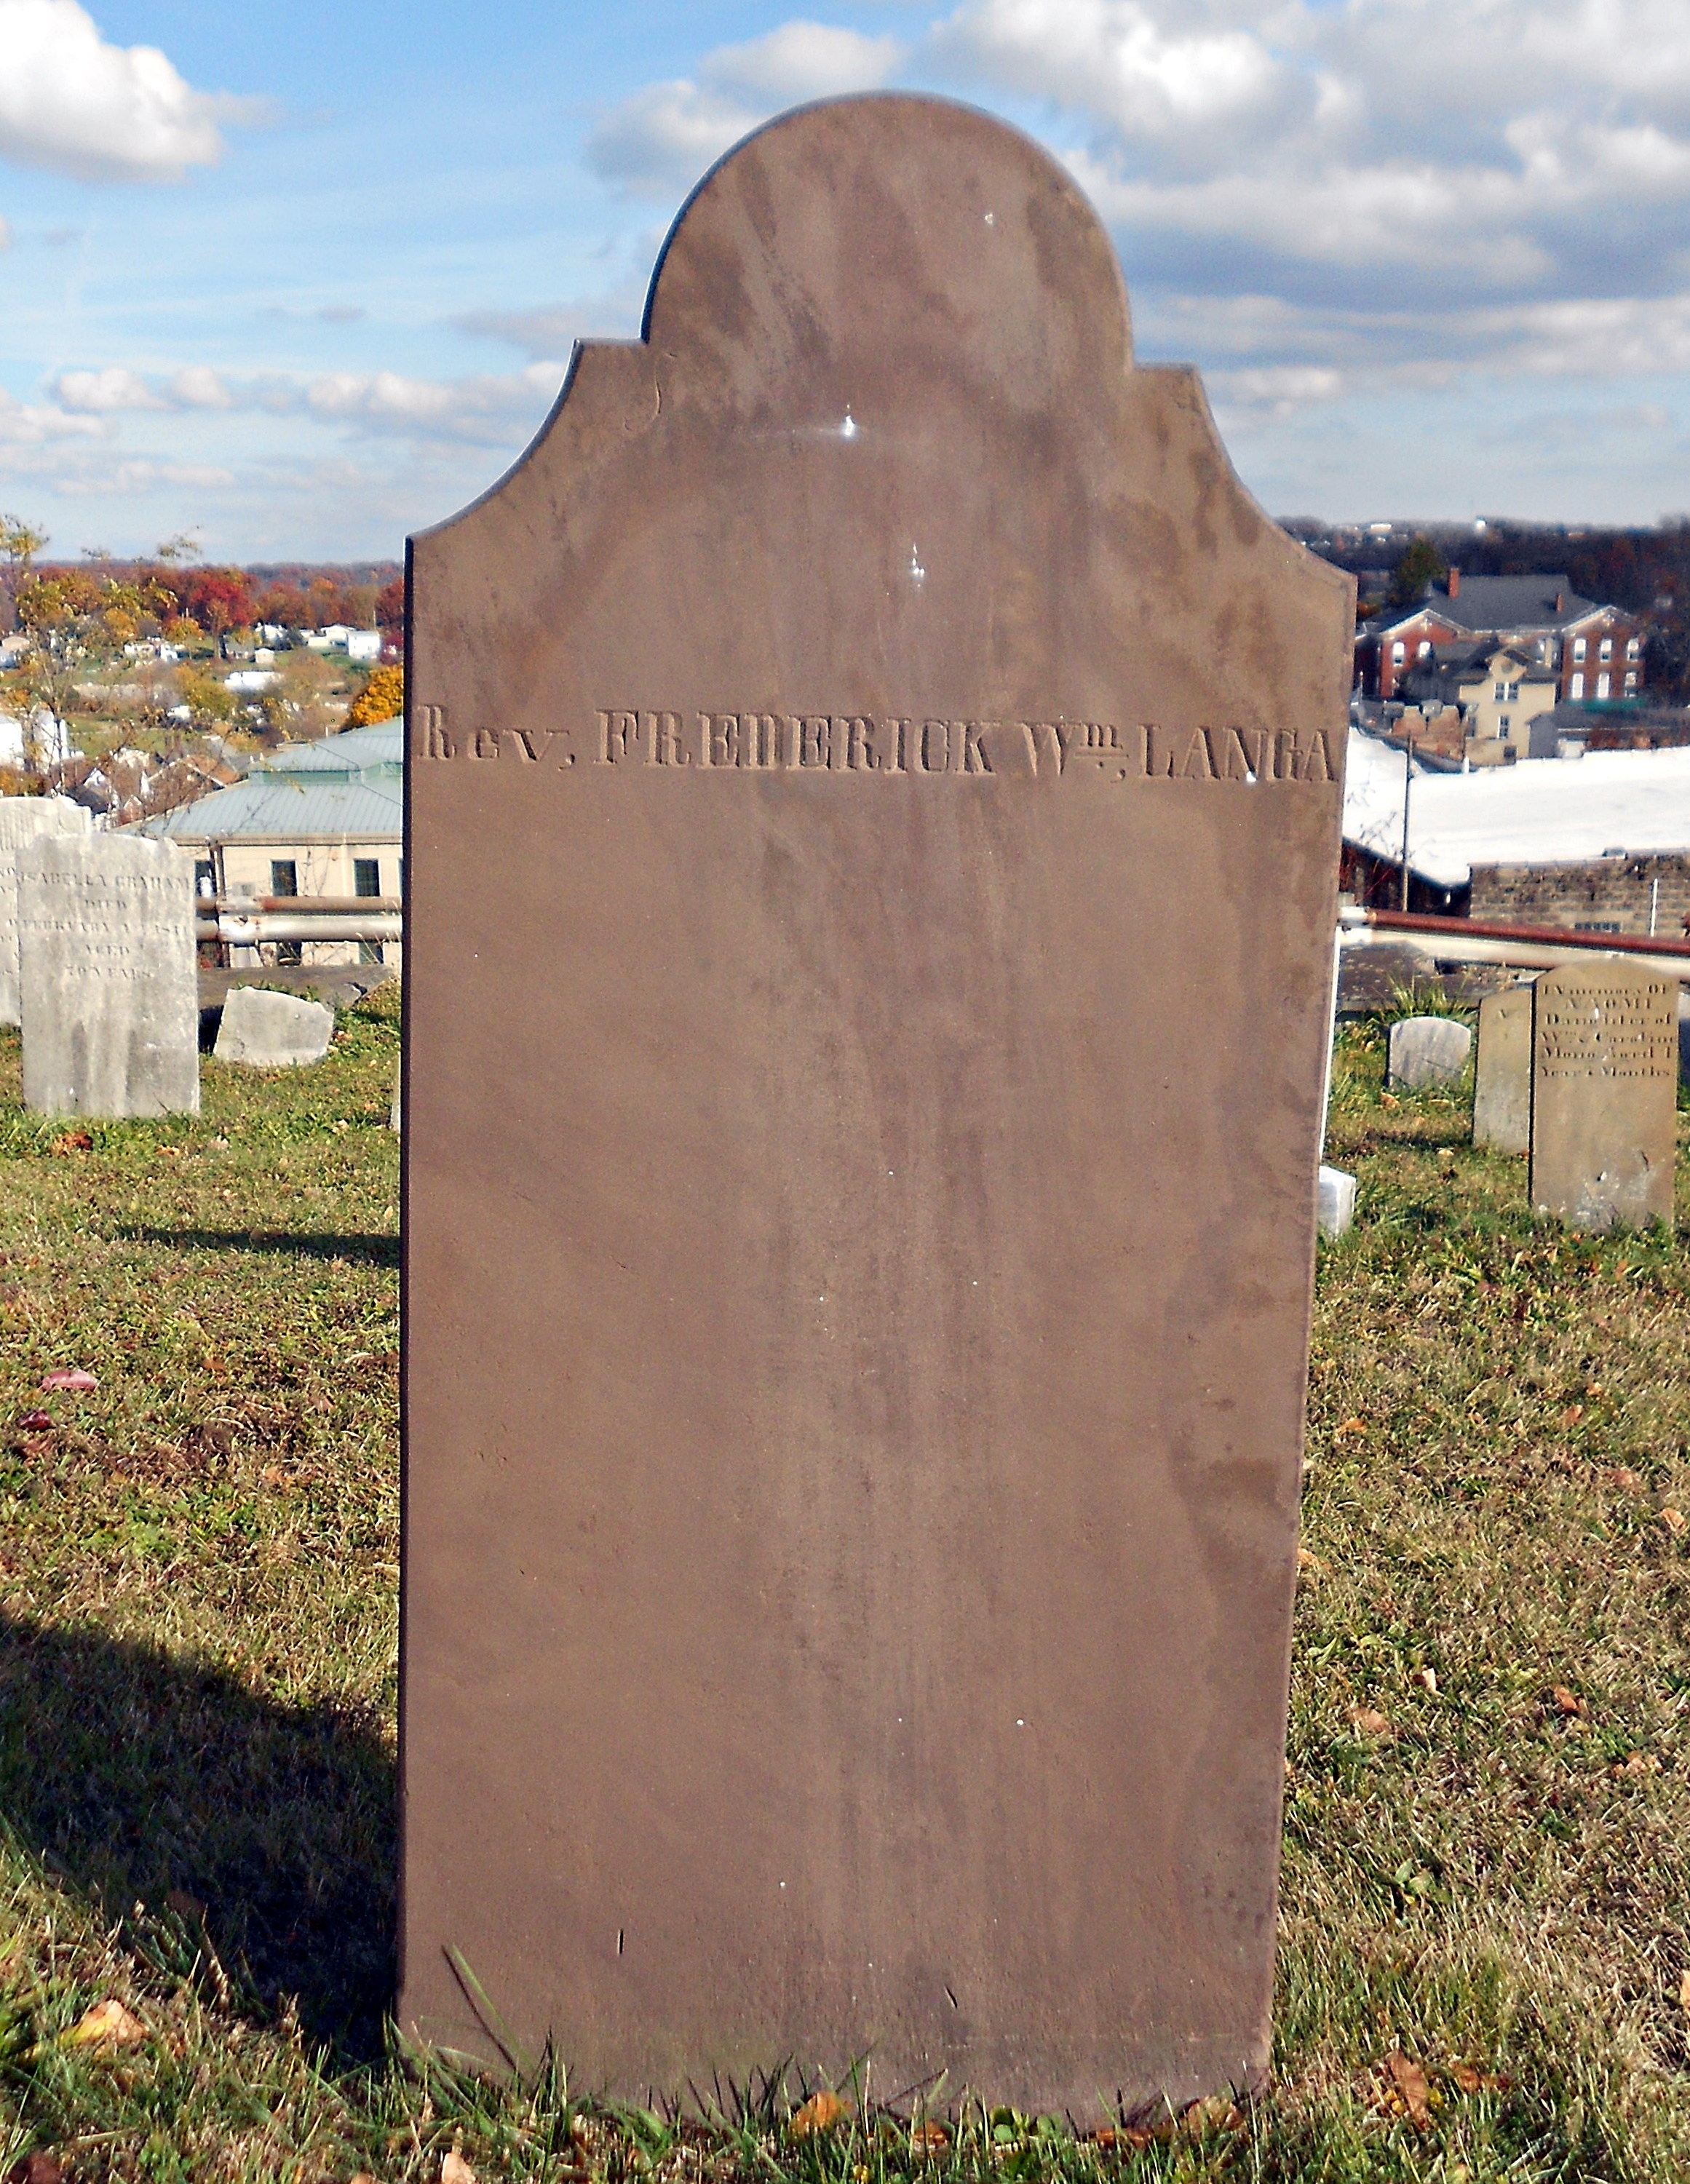 Headstone of Reverend Frederick William Langa in Union Cemetery